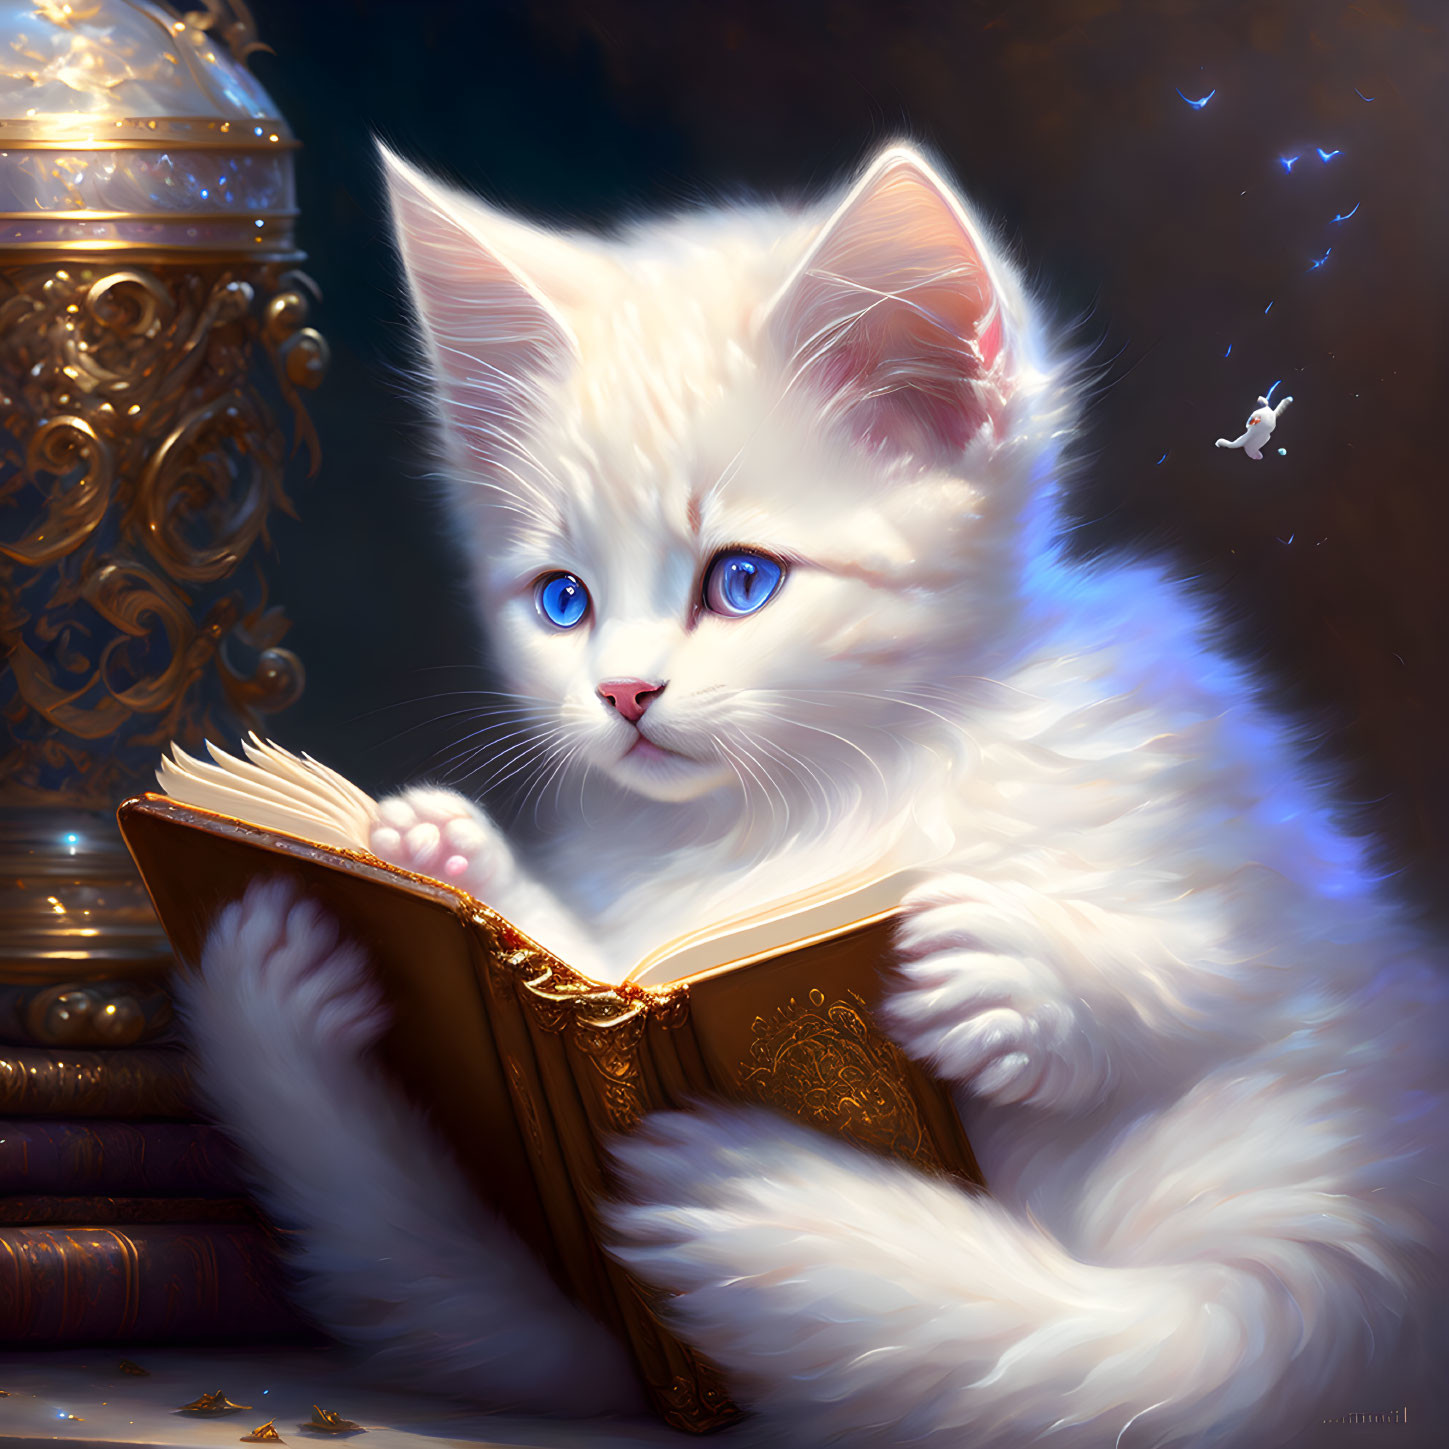 White Kitten with Blue Eyes Reading Book Next to Vase